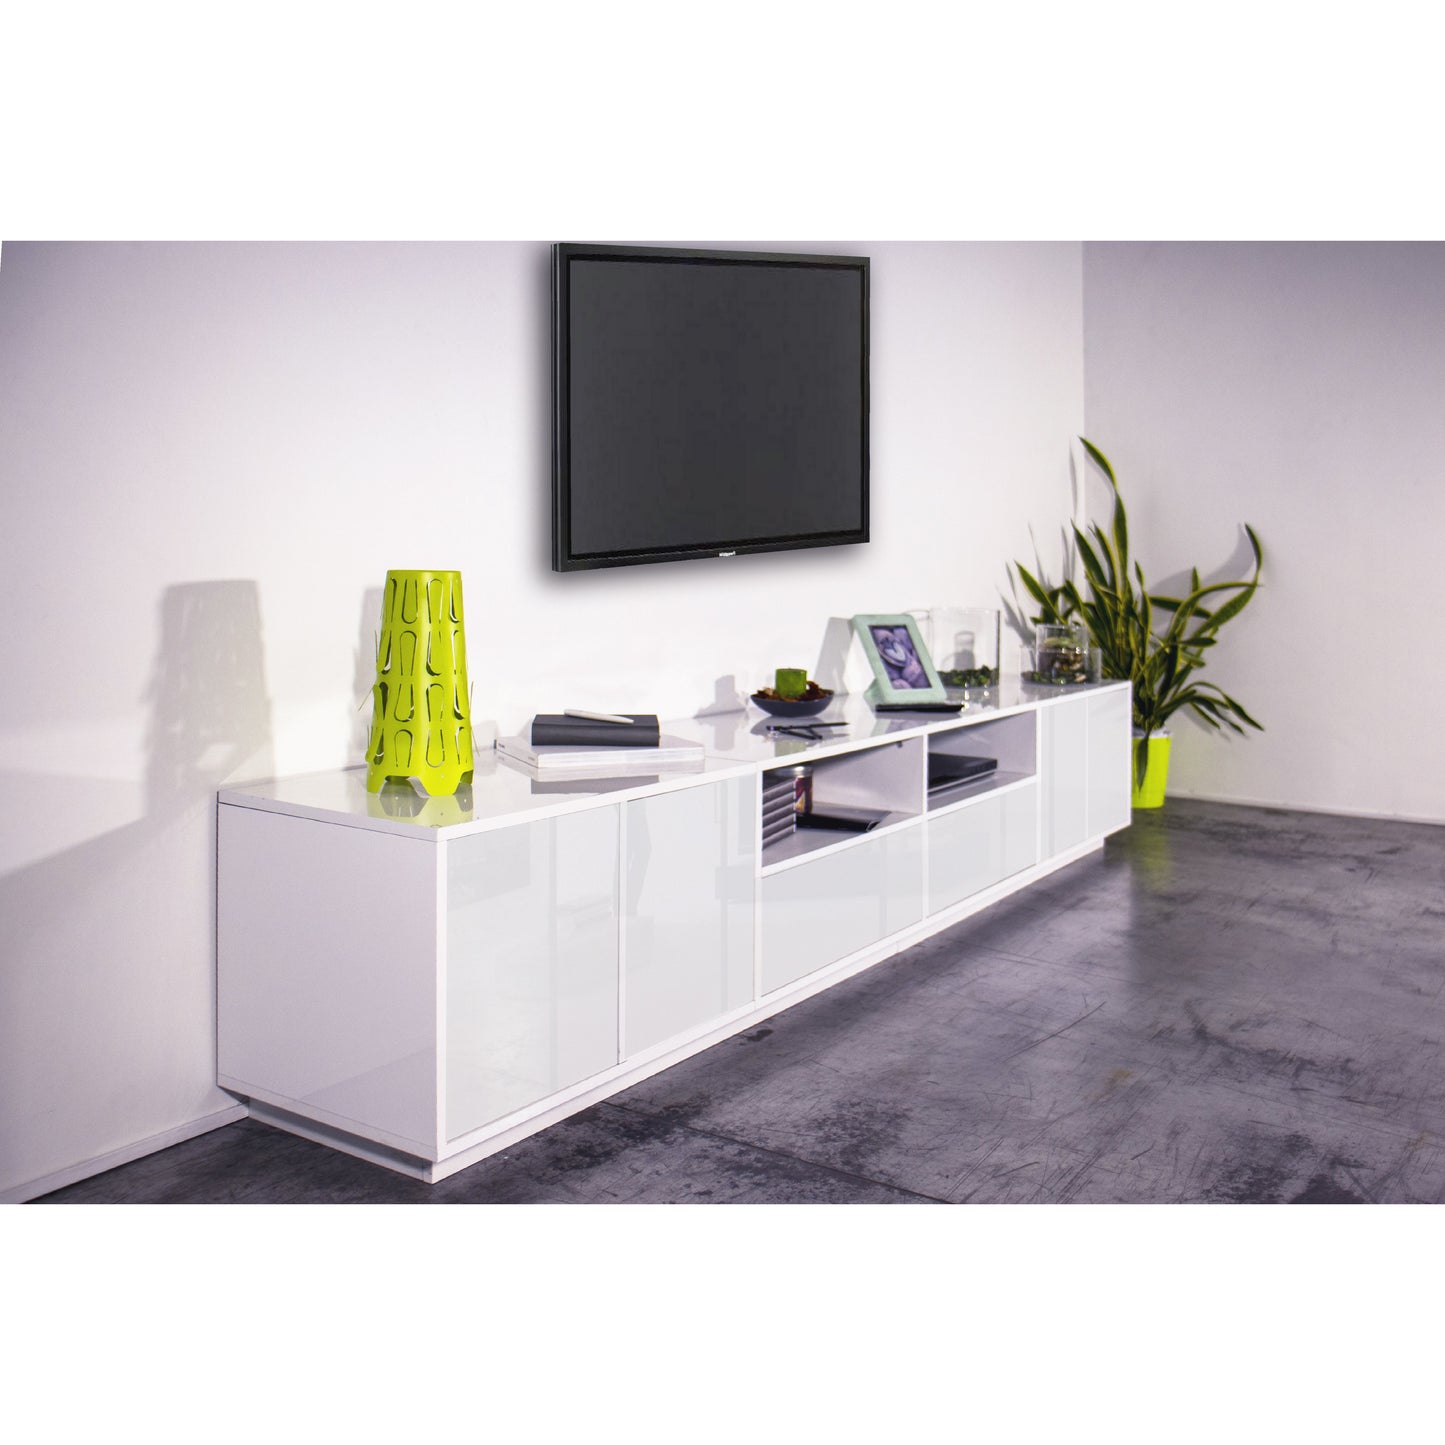 BLOOM TV meubel 260 - Wit hoogglans